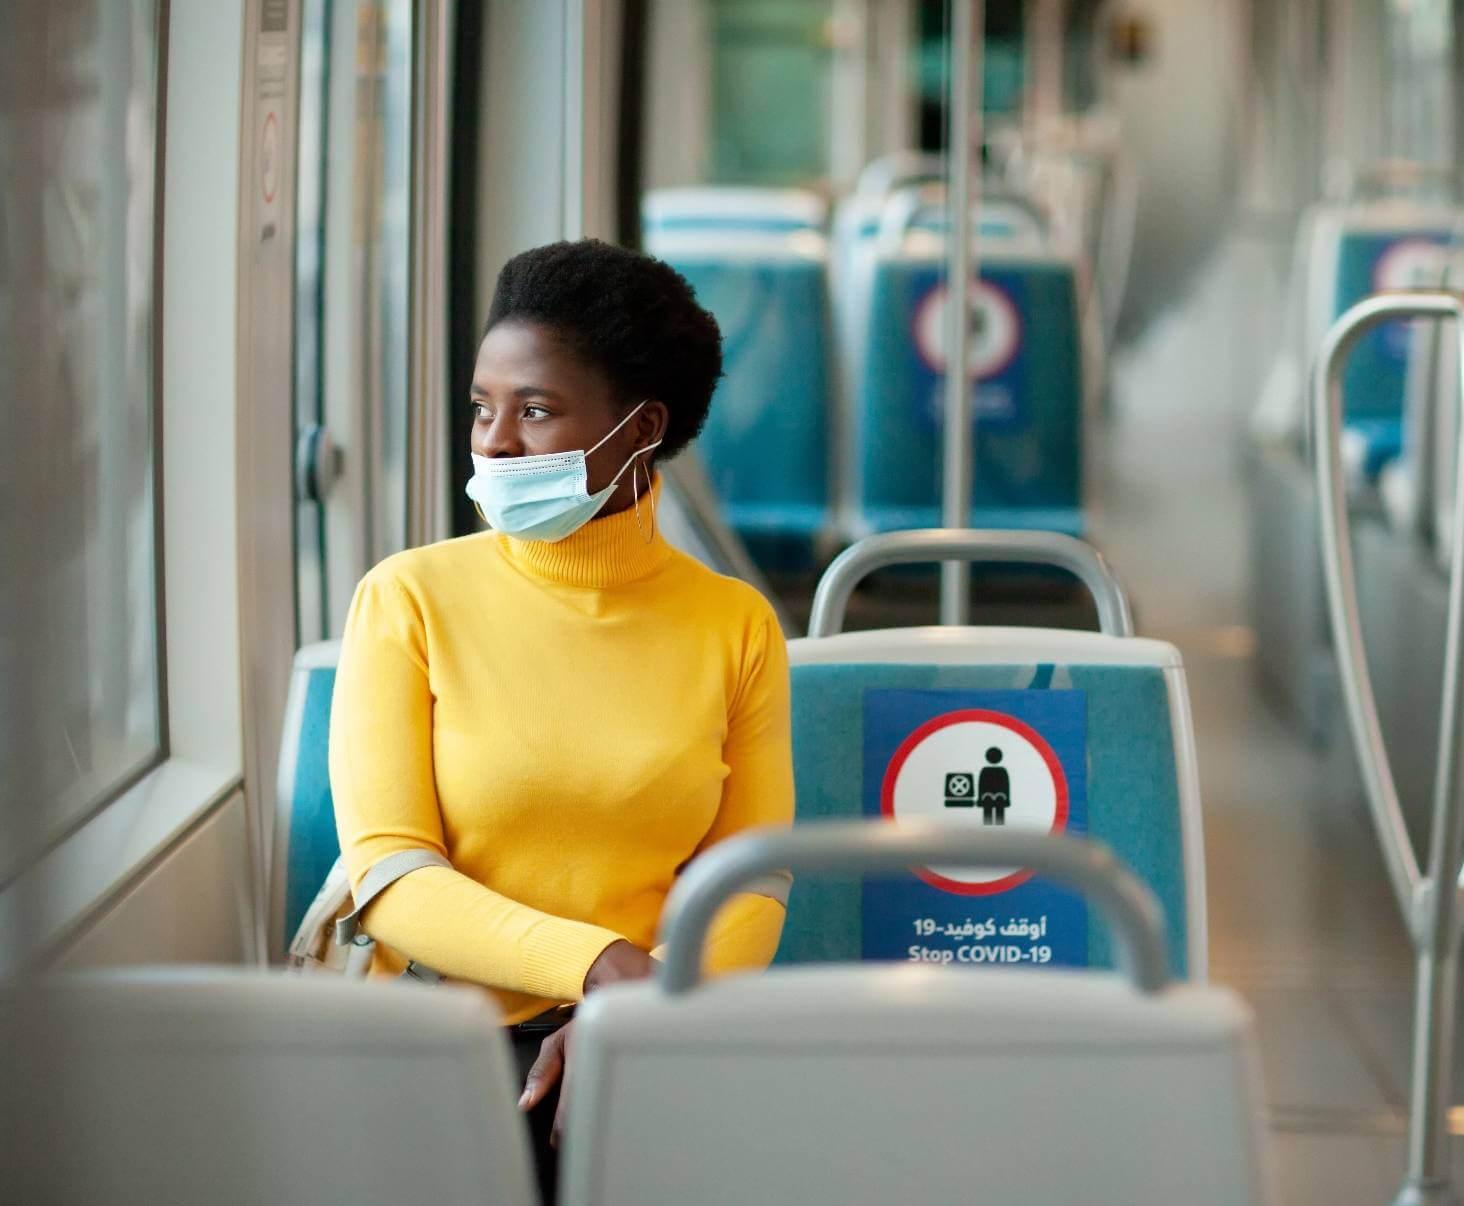 Masked Woman on Public Transit